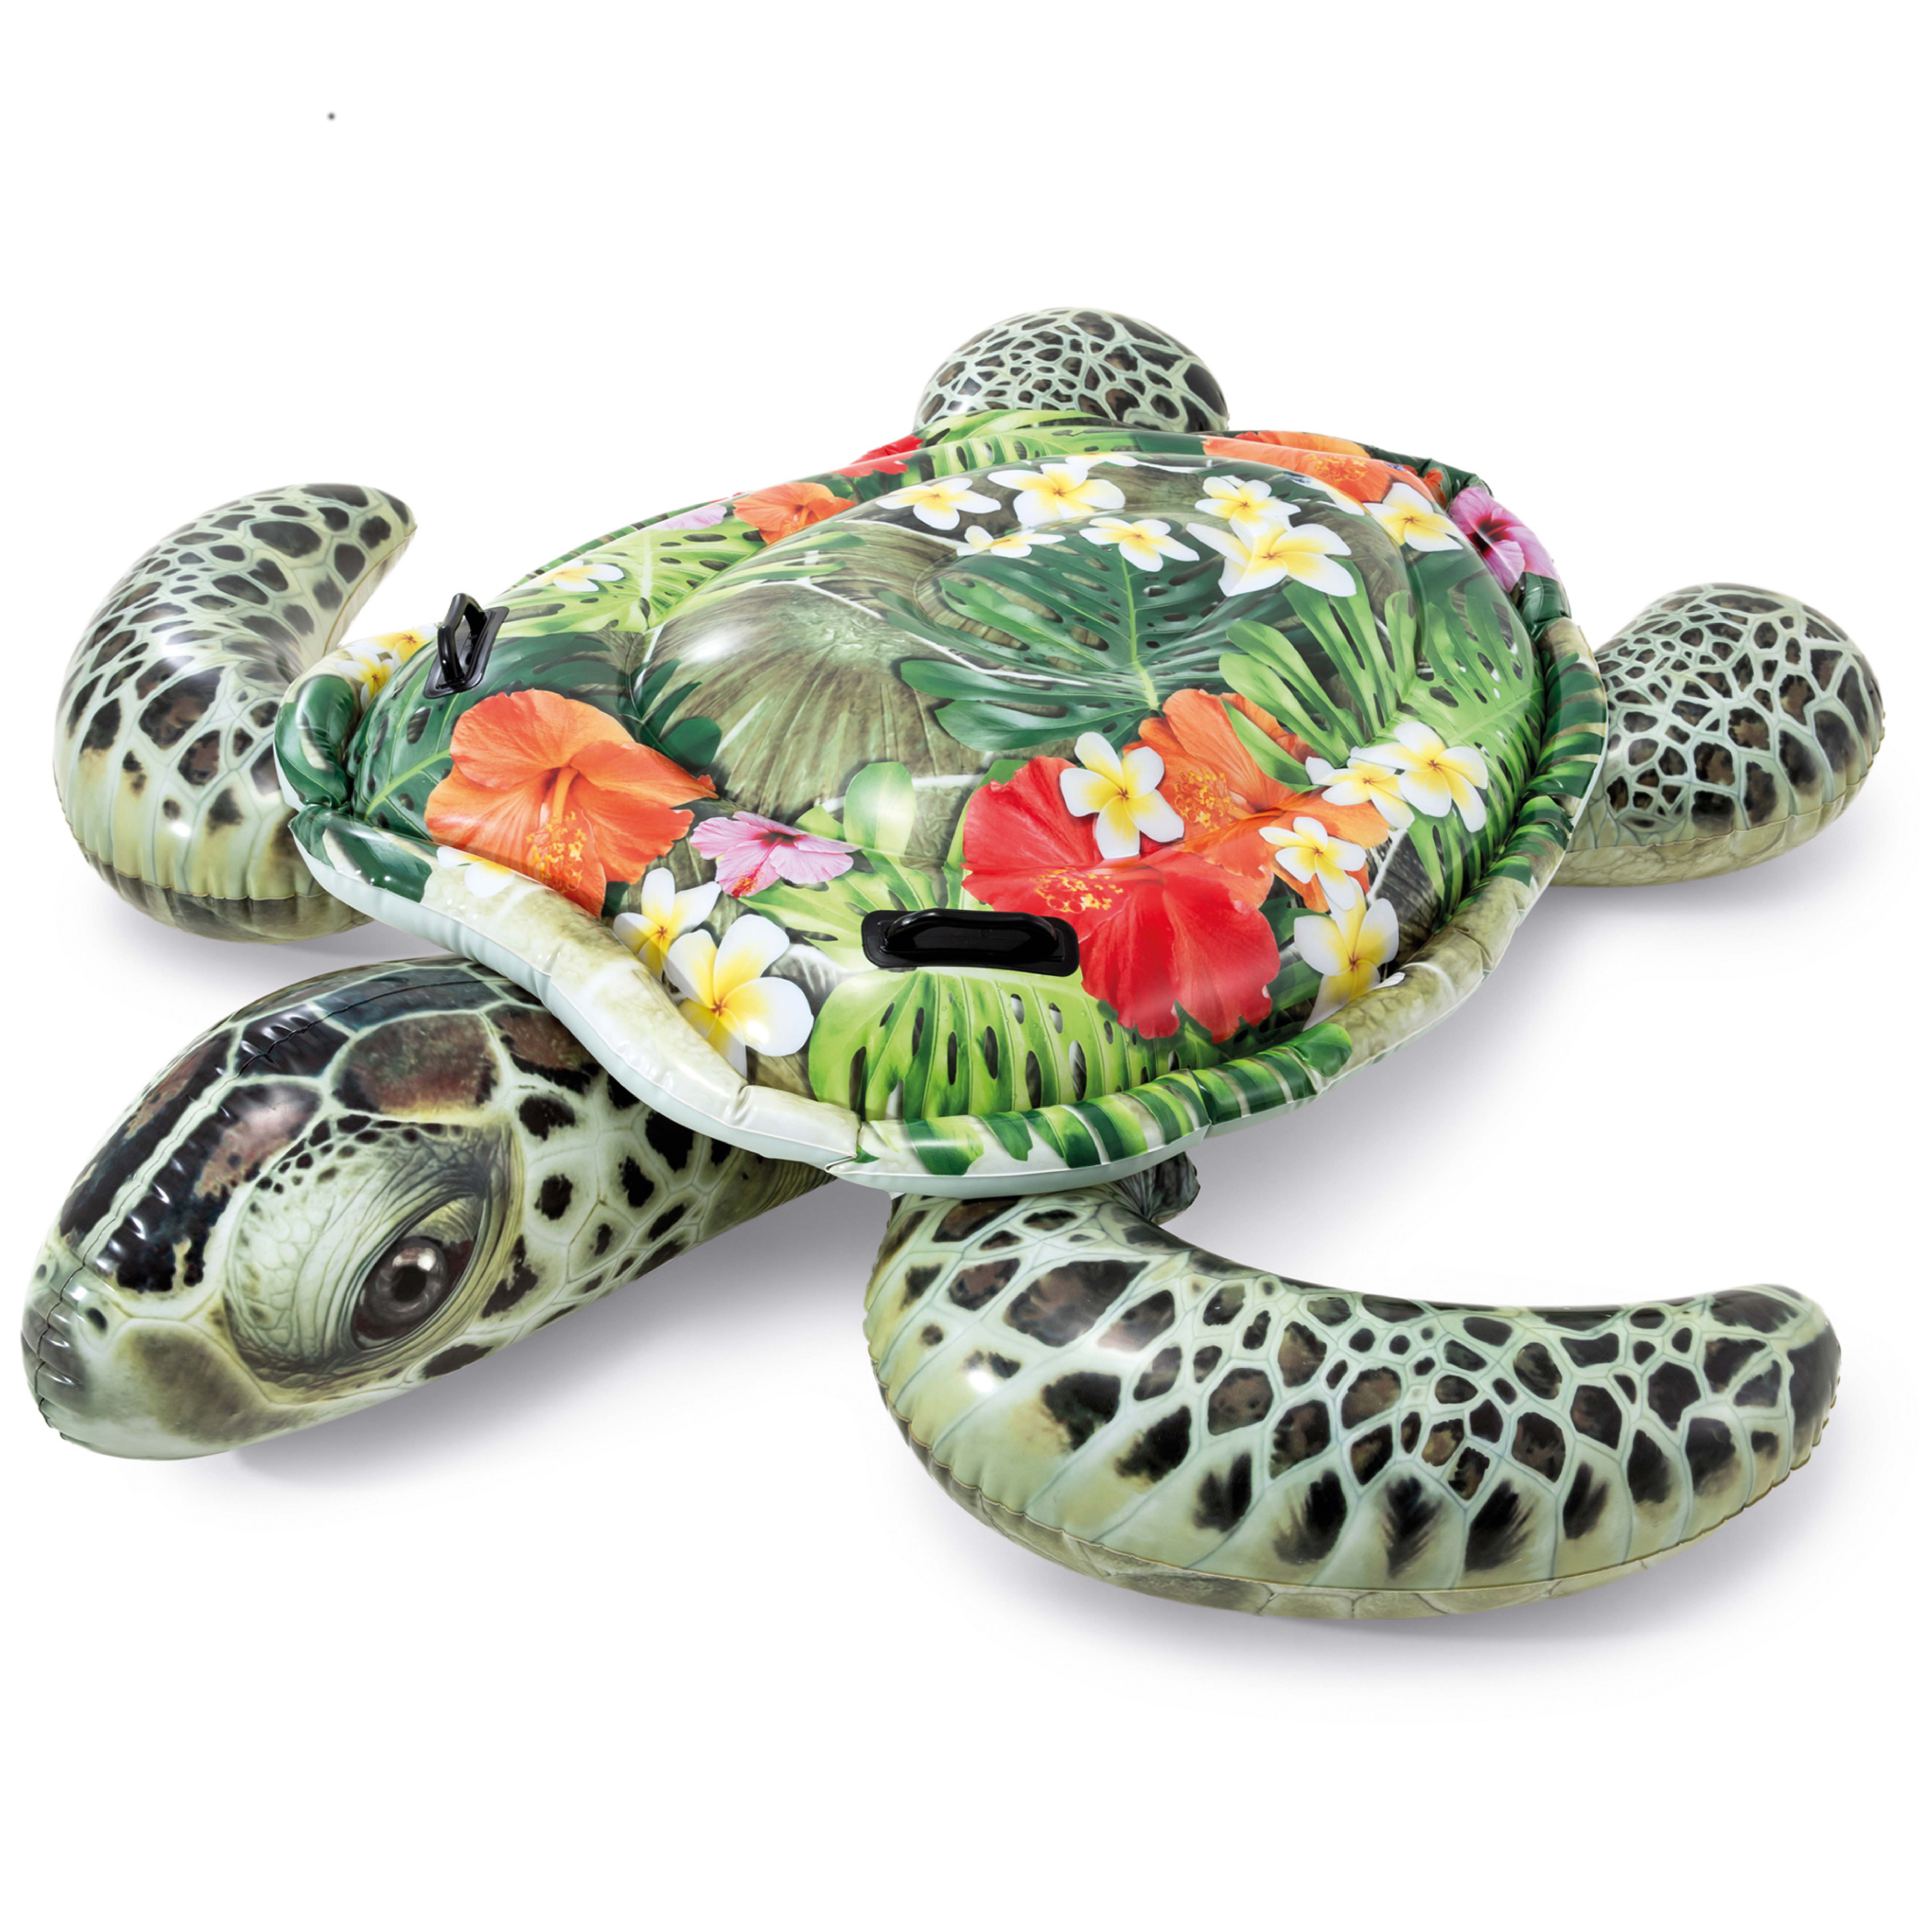 Intex realistic sea turtle ride-on